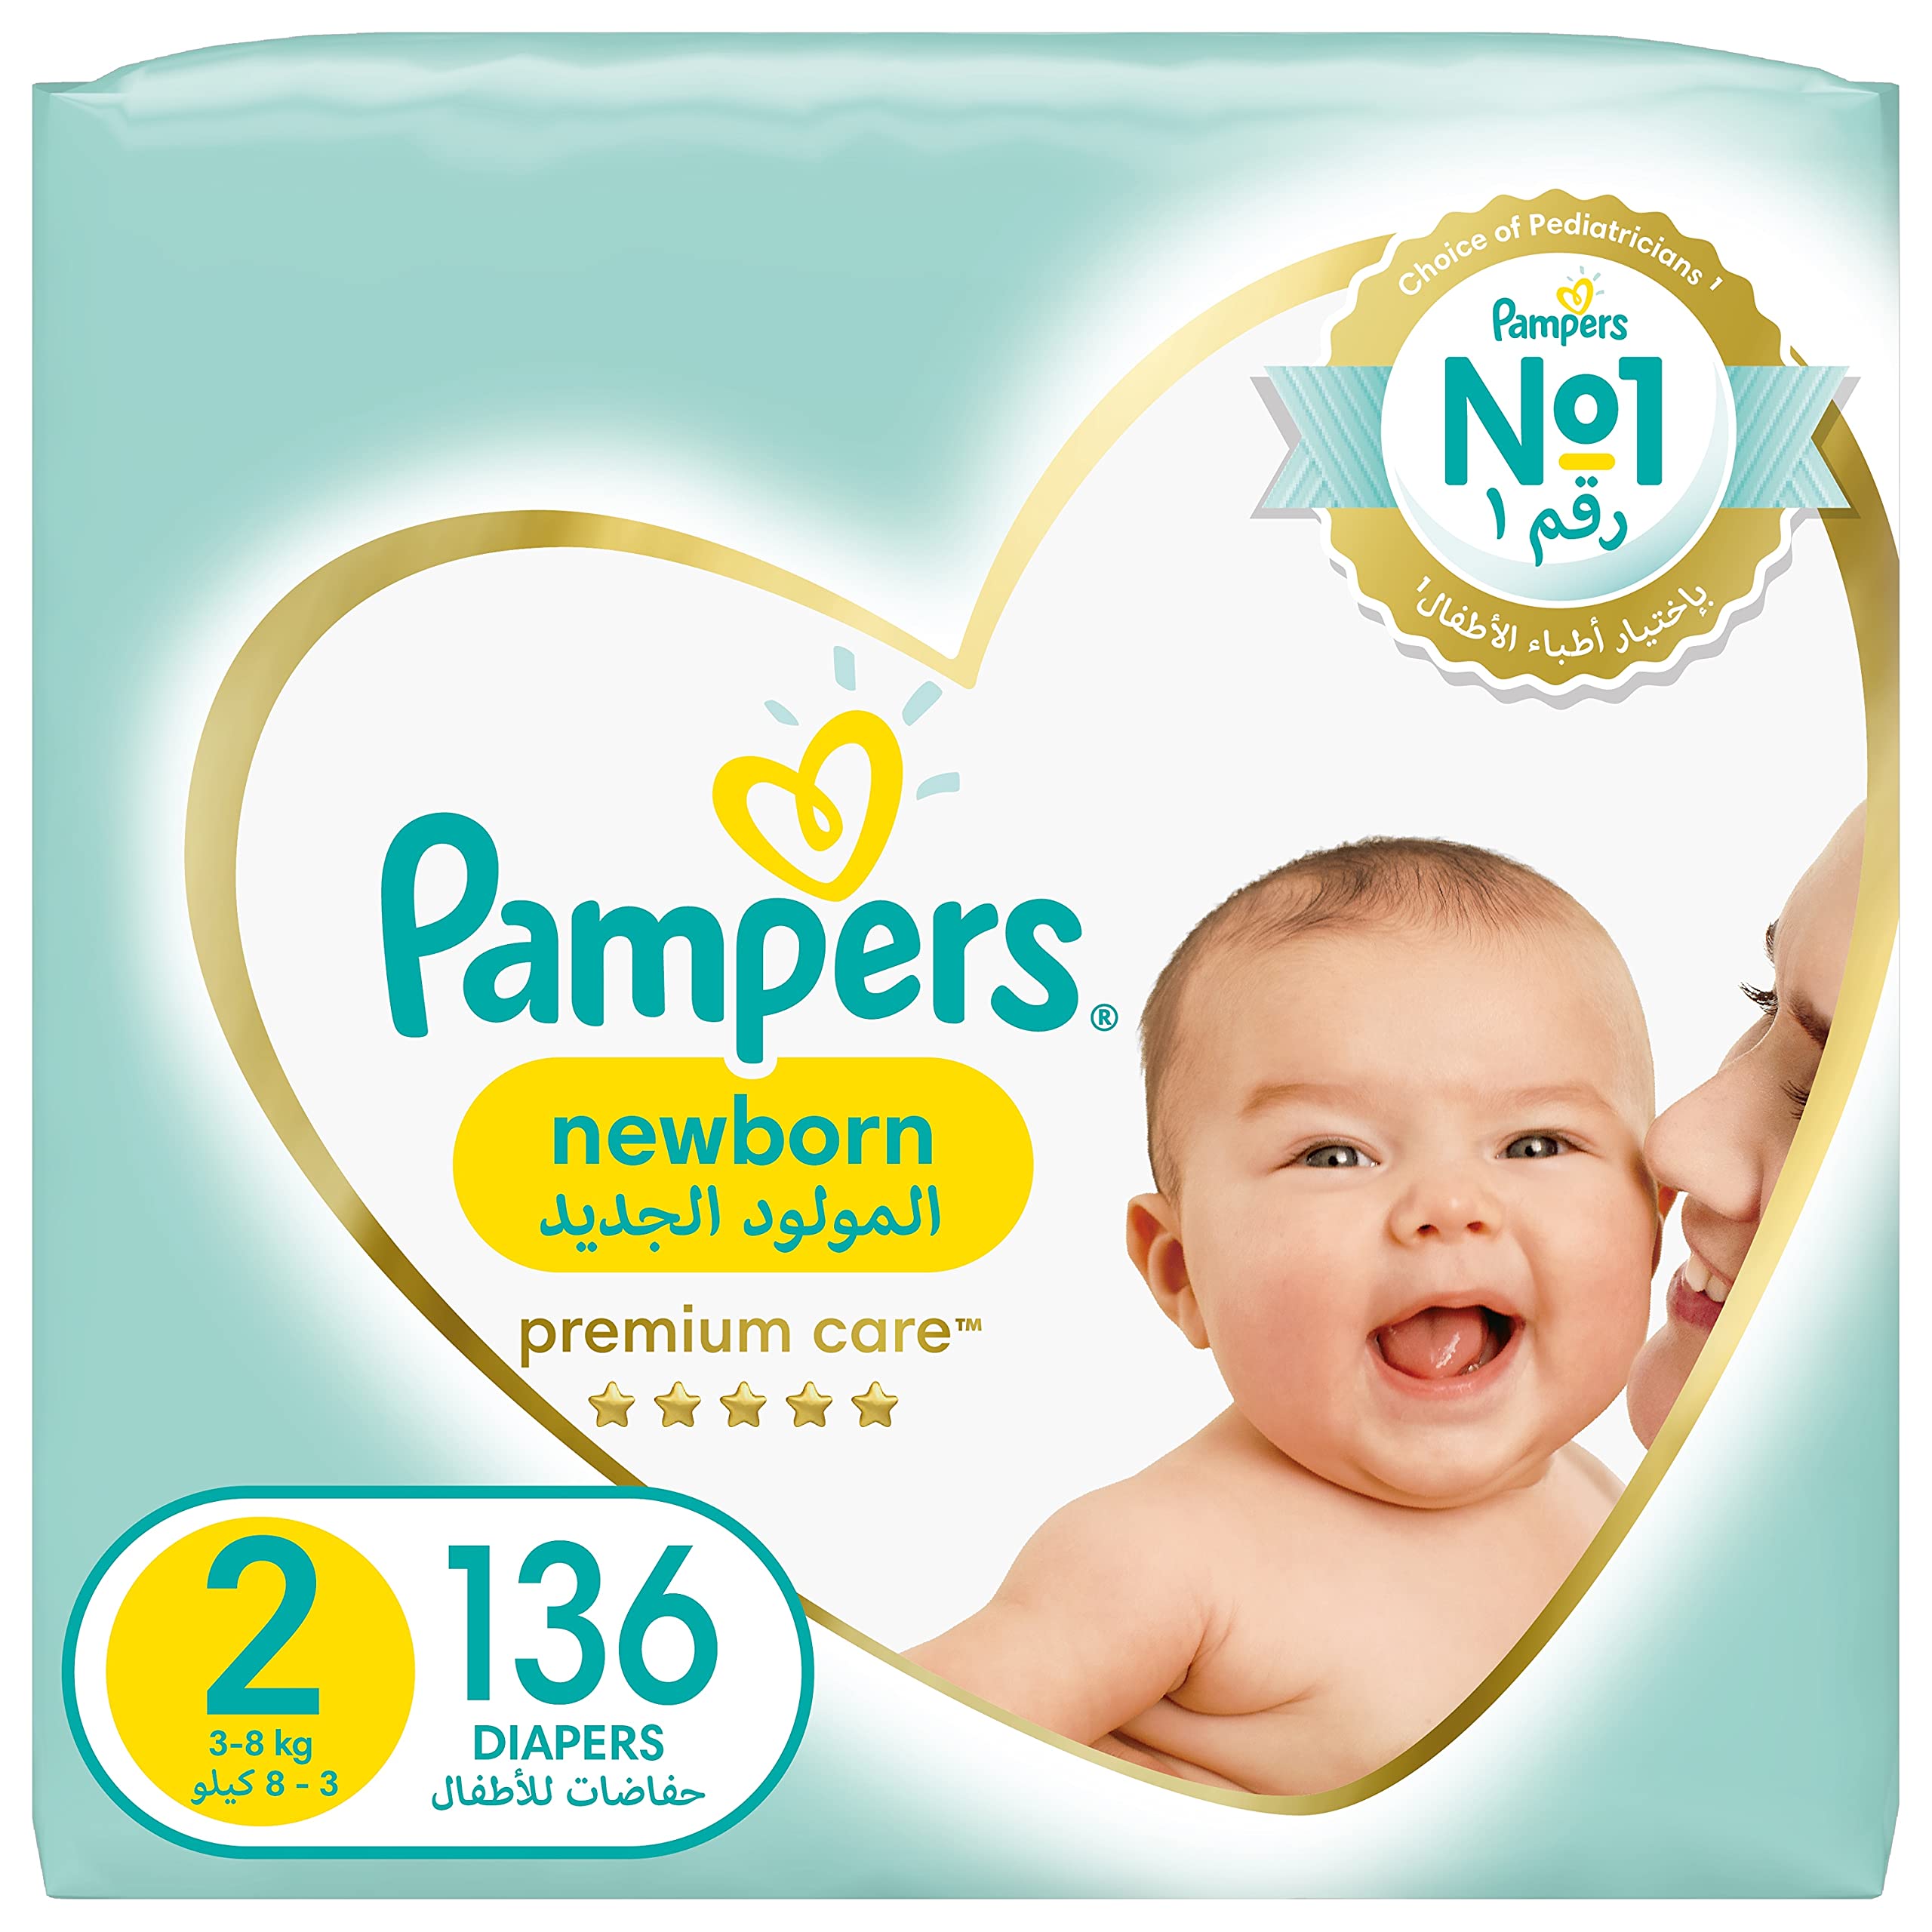 Pampers Premium Care Diapers Size 2, Mini 3-8kg The Softest Diaper 136pcs حفاضات بامبرز للعناية الفائقة مقاس 2، ميني 3-8 كغم – 136 قطعة